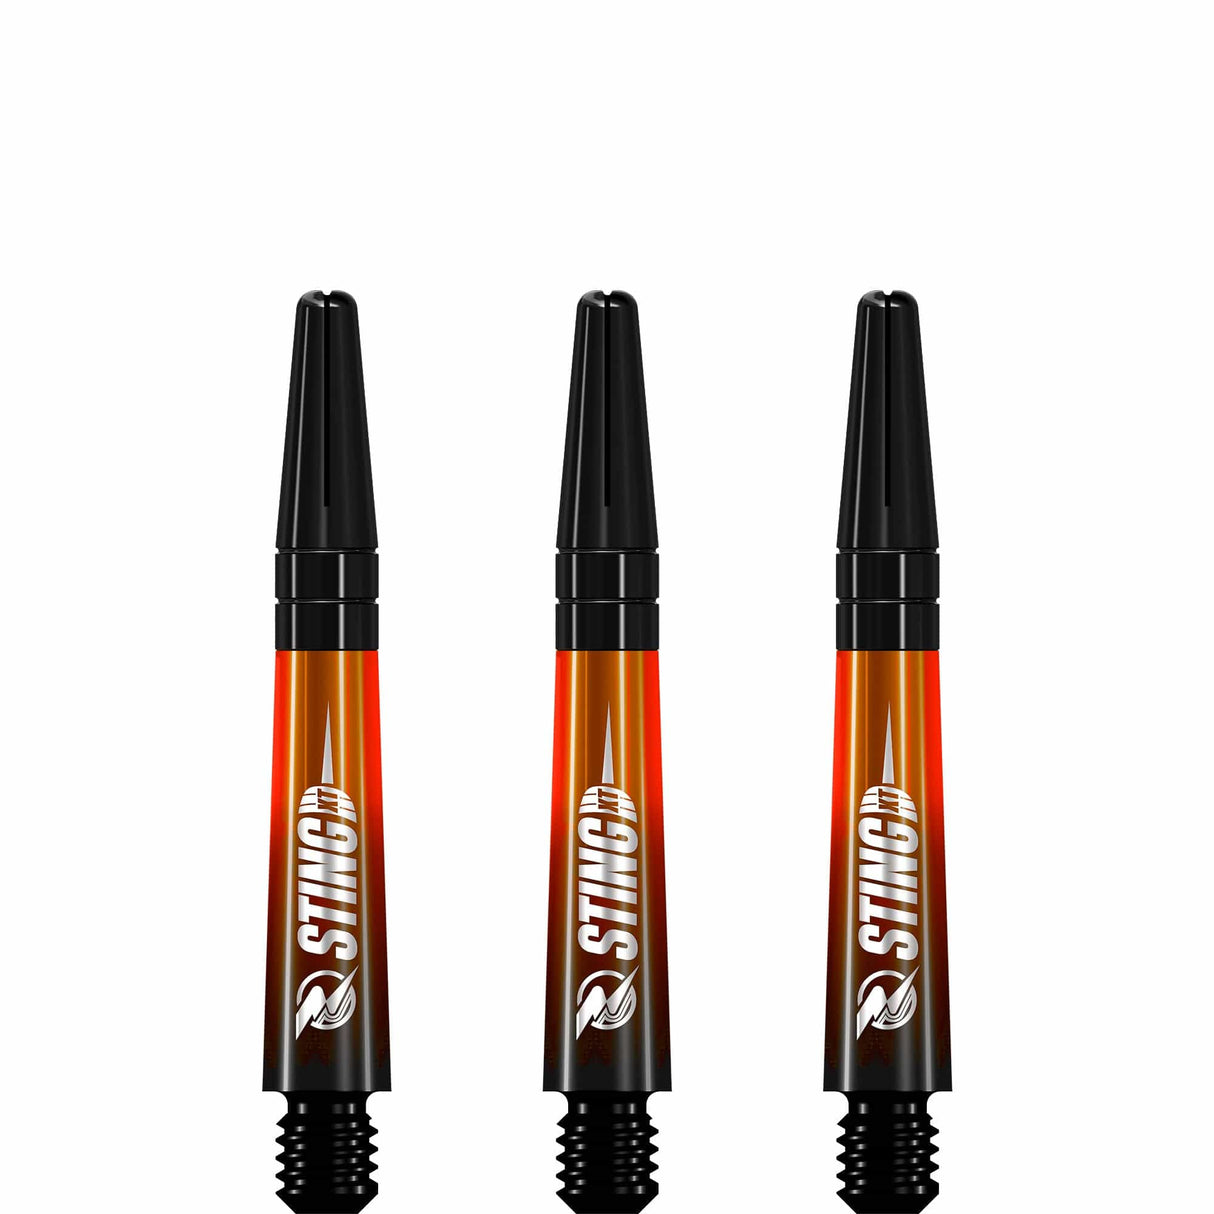 Ruthless Sting XT Dart Shafts - Polycarbonate - Gradient Black & Orange - Black Top Short